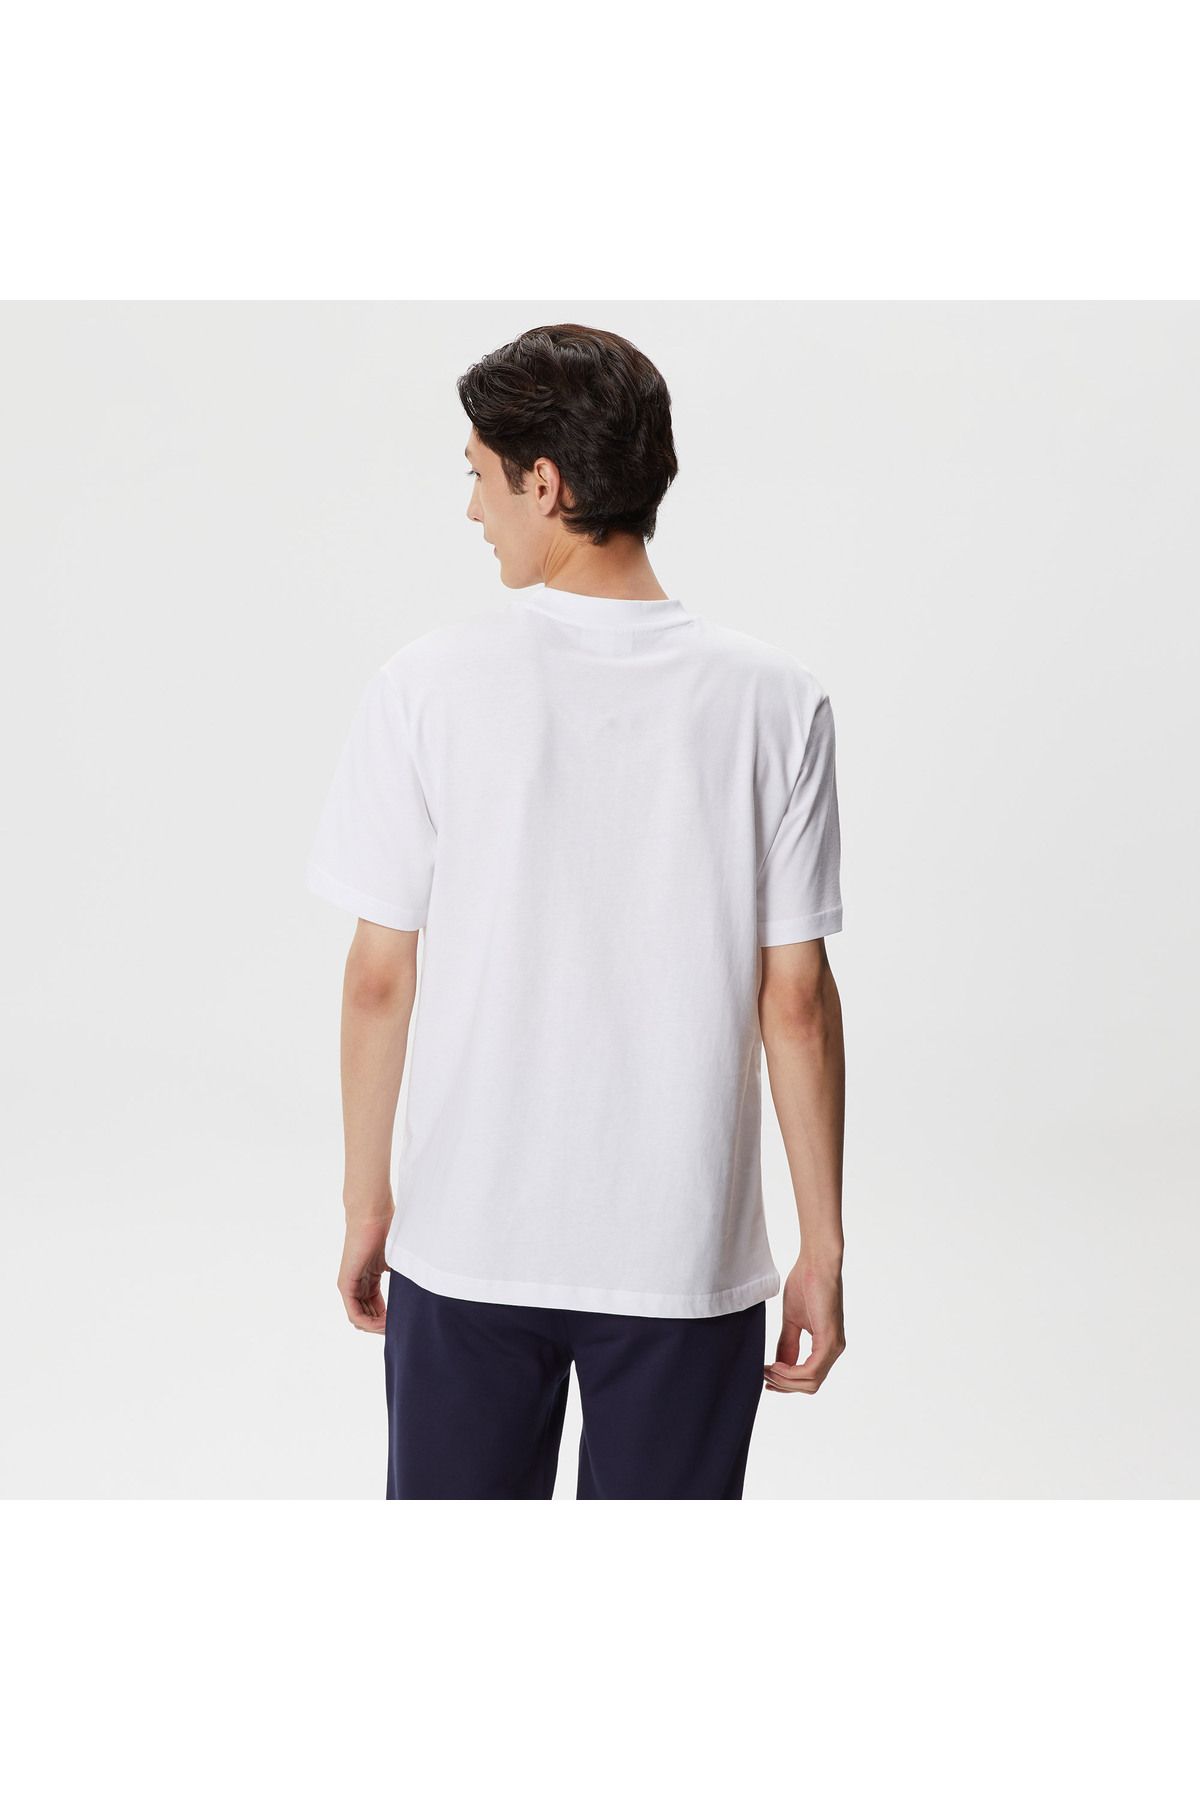 Lacoste یقه دوچرخه تناسب مردانه تی شرت سفید چاپ شده